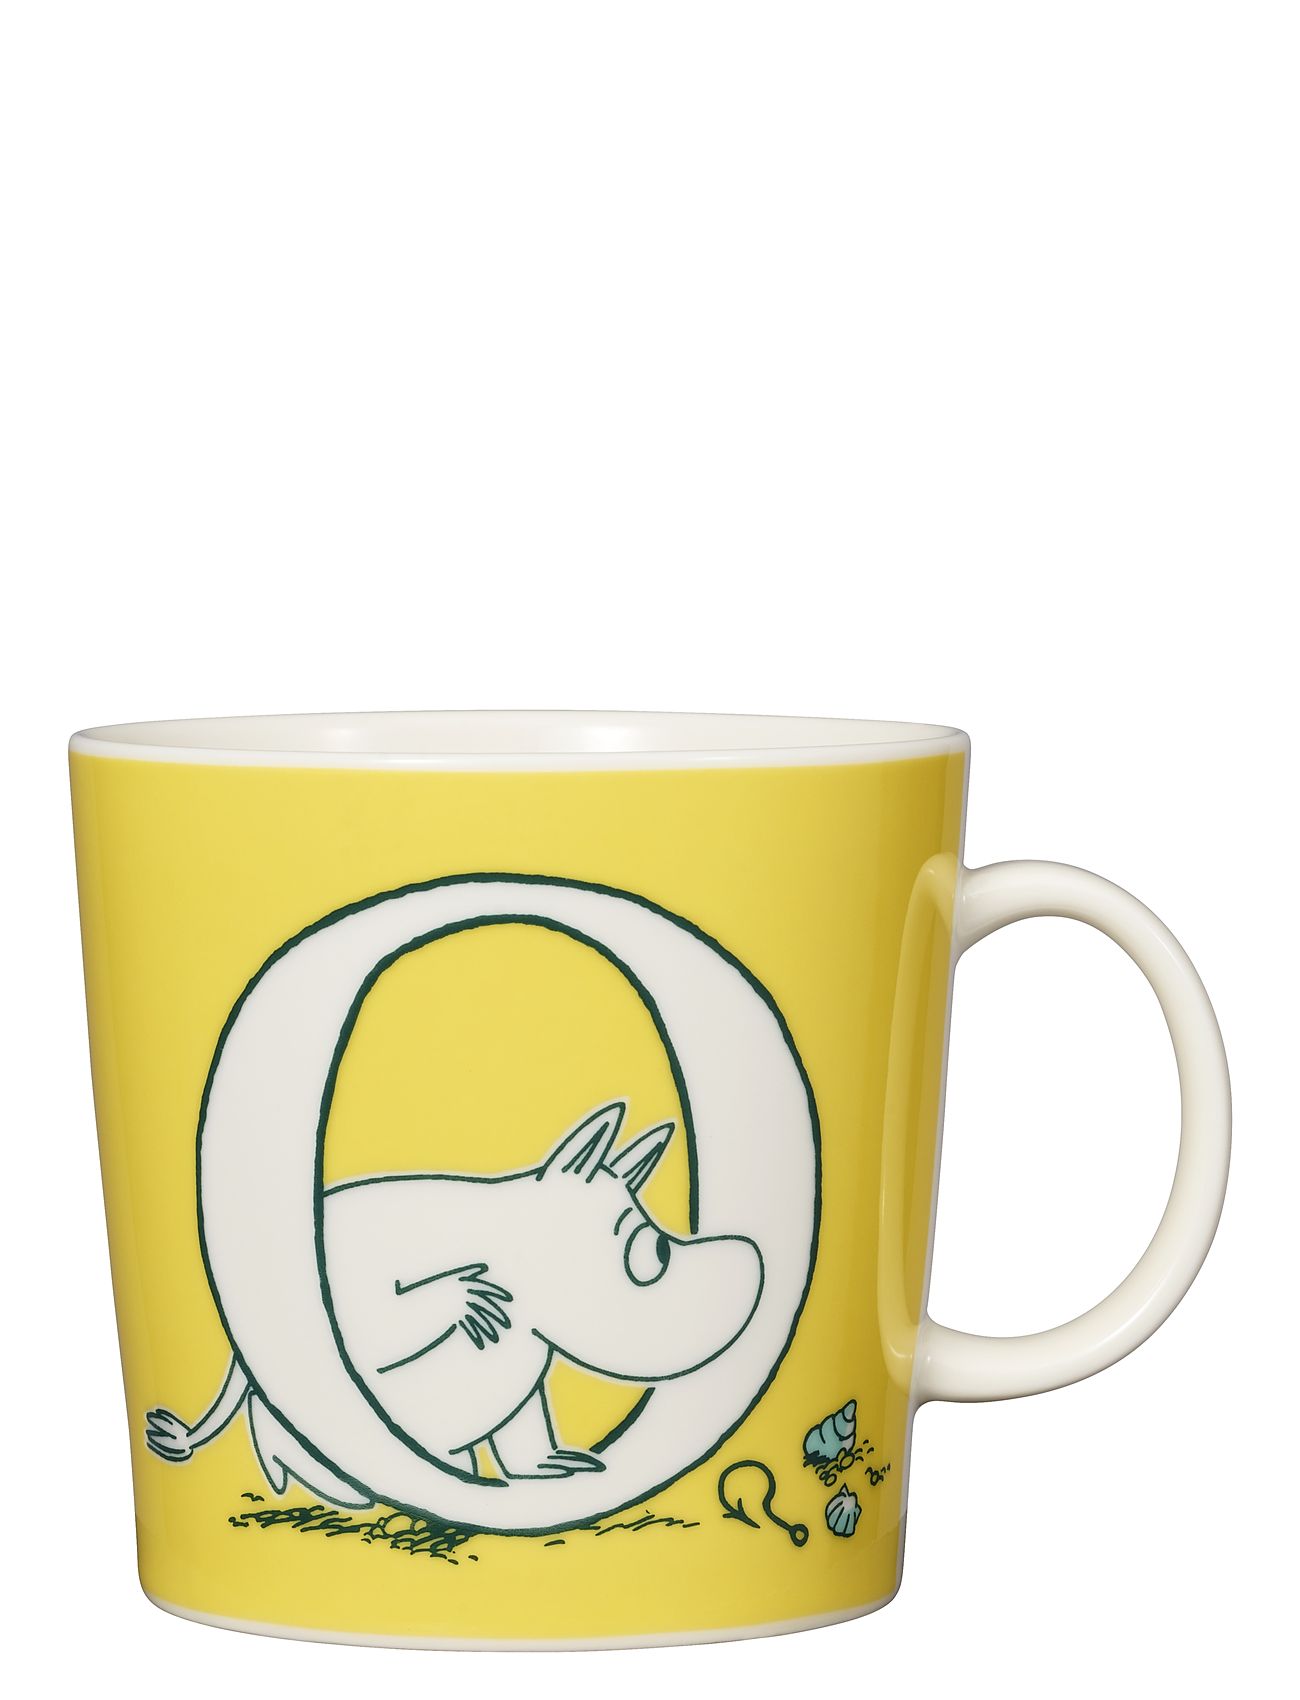 Moomin Mug 04L Abc O Home Tableware Cups & Mugs Coffee Cups Yellow Arabia